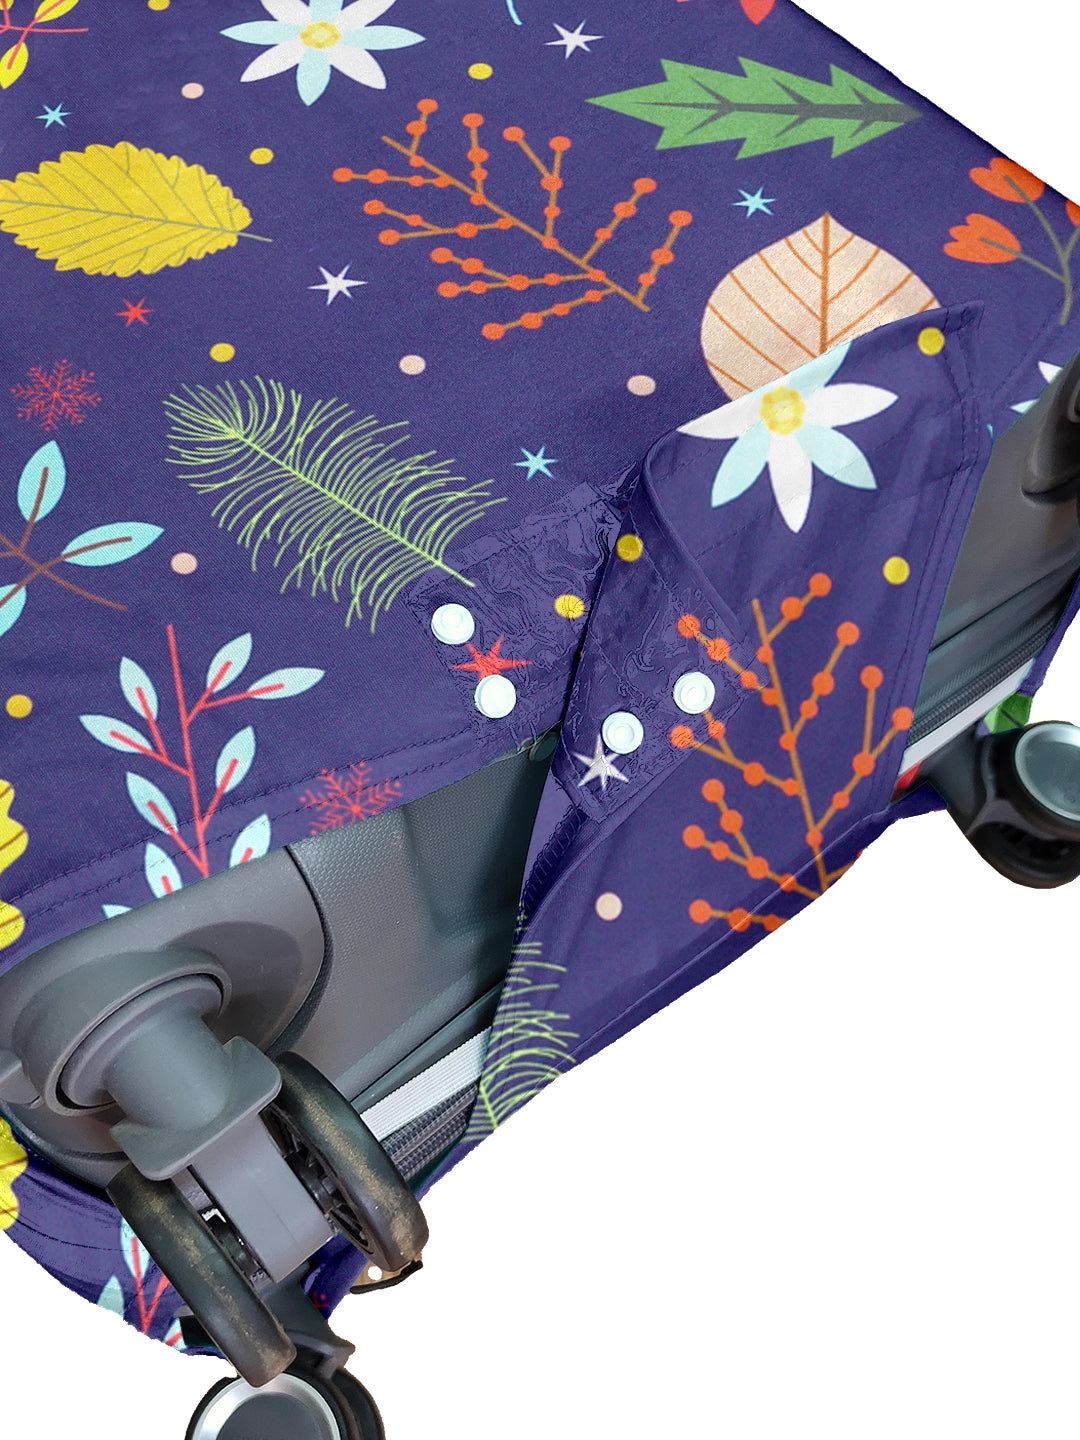 Stretchable Printed Protective Luggage Bag Cover Medium- Purple